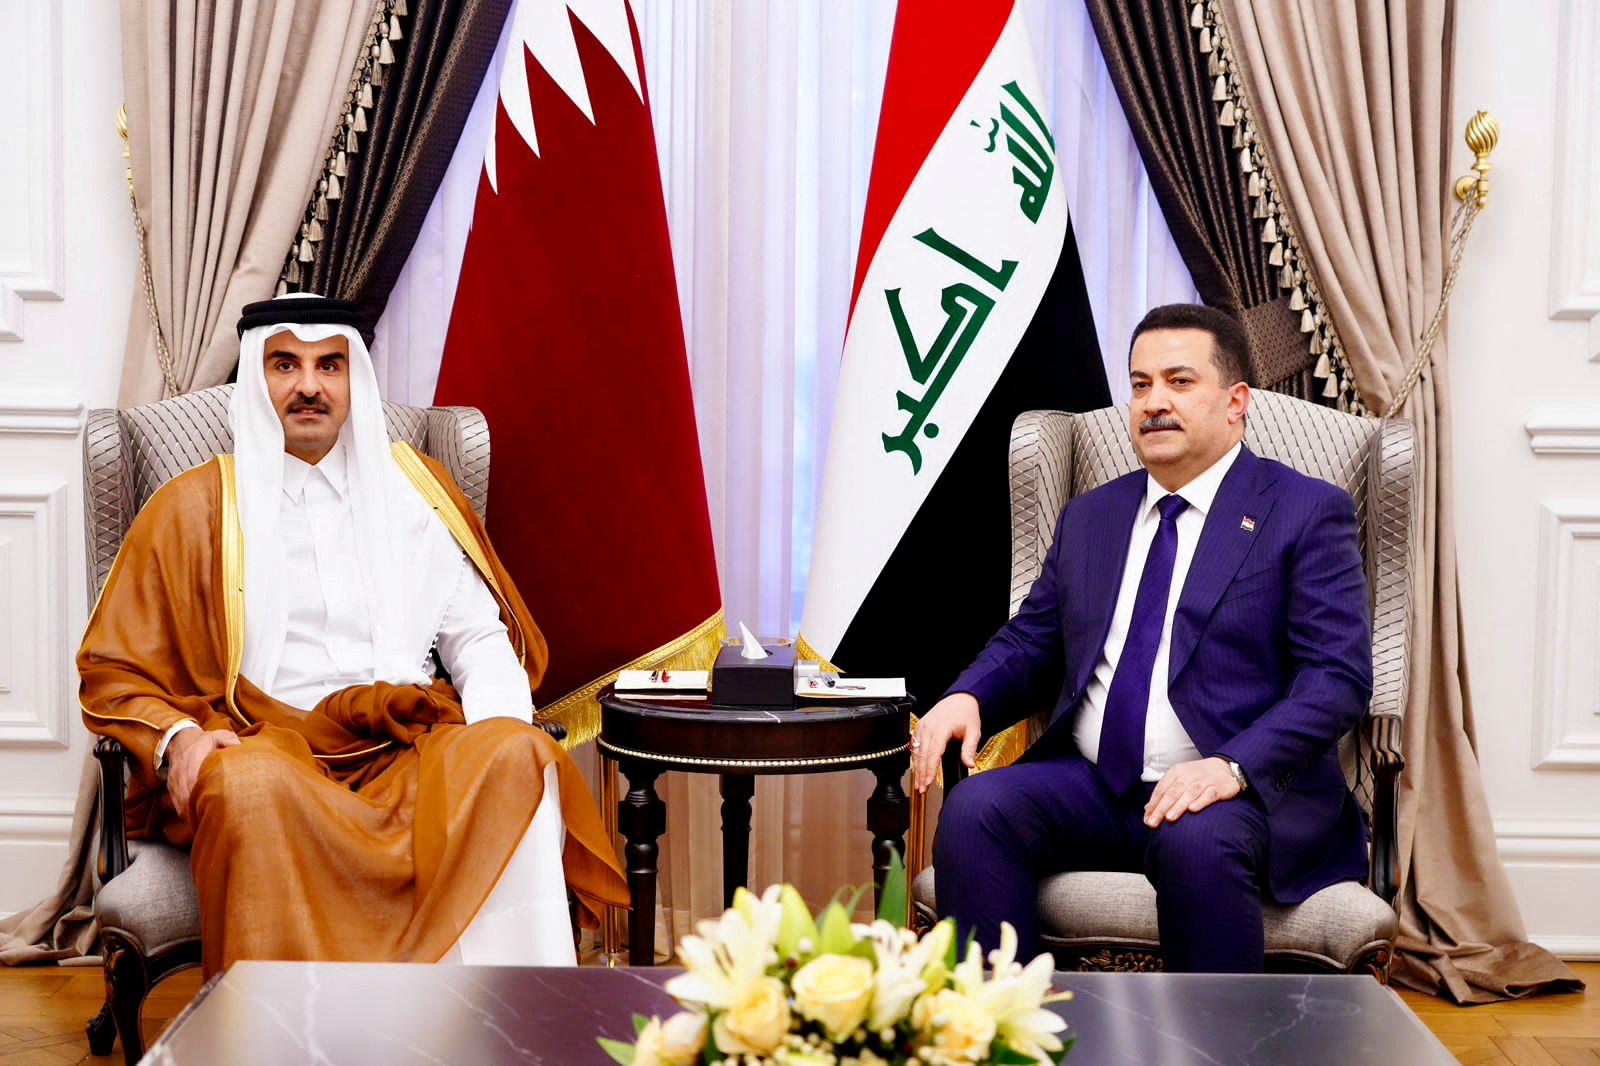 Iraqi PM Mohammed Shia al-Sudani meets with Qatar's Emir Sheikh Tamim bin Hamad al-Thani, in Baghdad